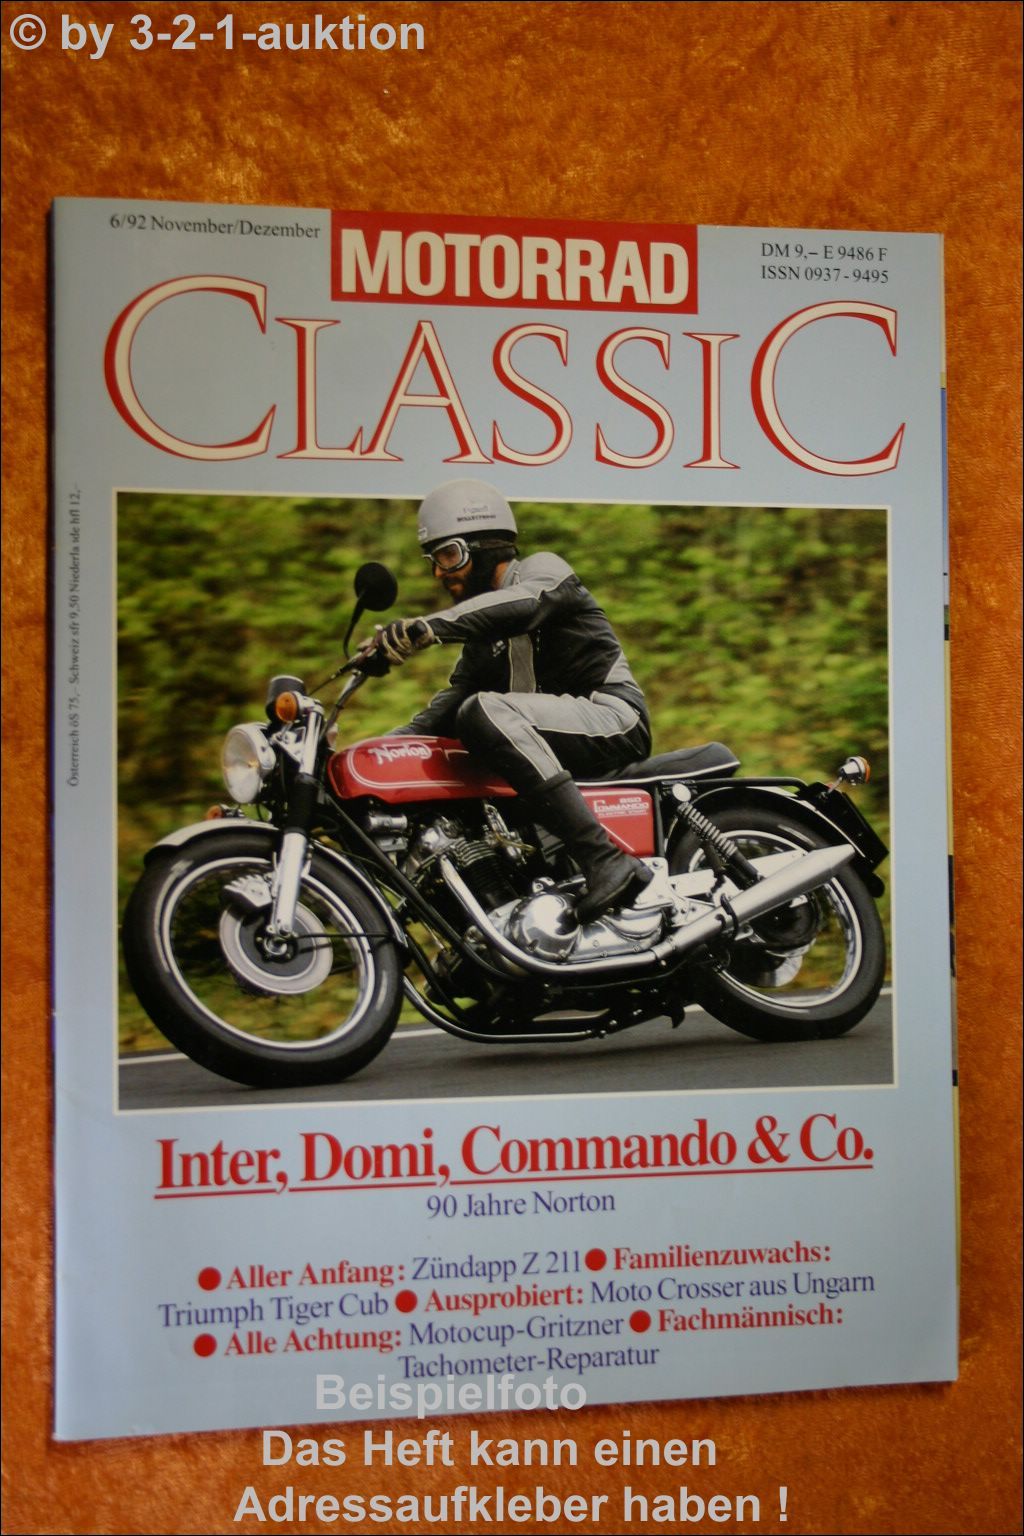 Motorrad Classic 6/92 Norton Zündapp Z 211 Triumph